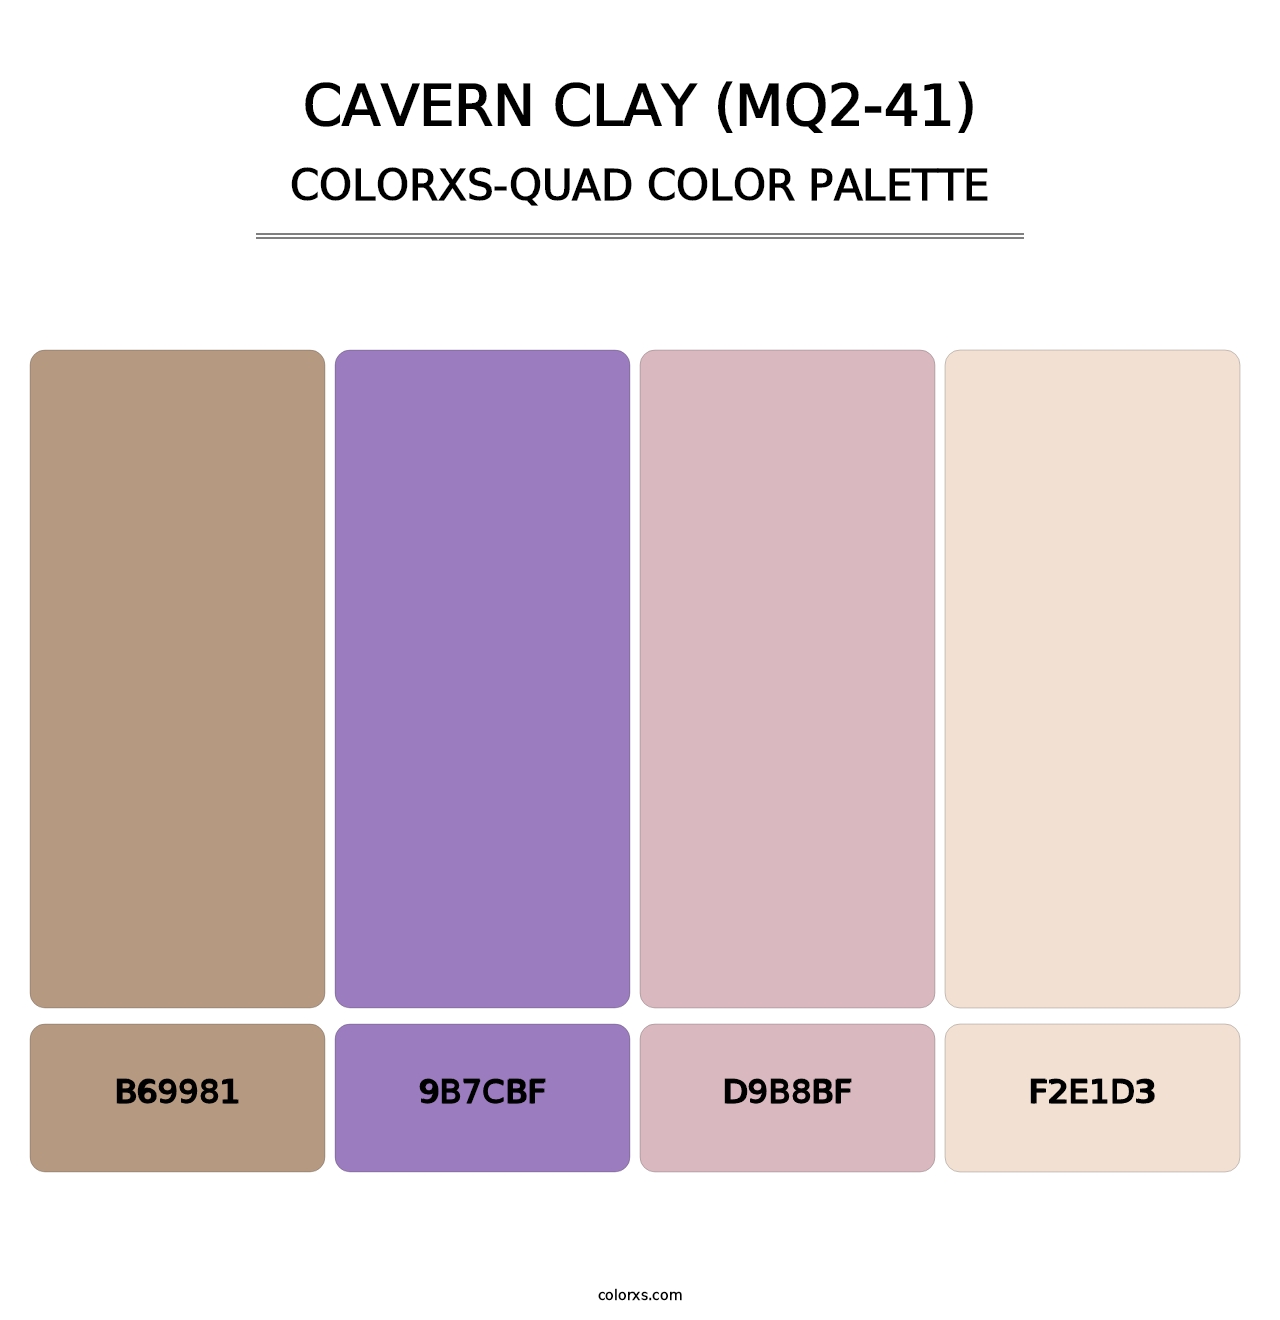 Cavern Clay (MQ2-41) - Colorxs Quad Palette